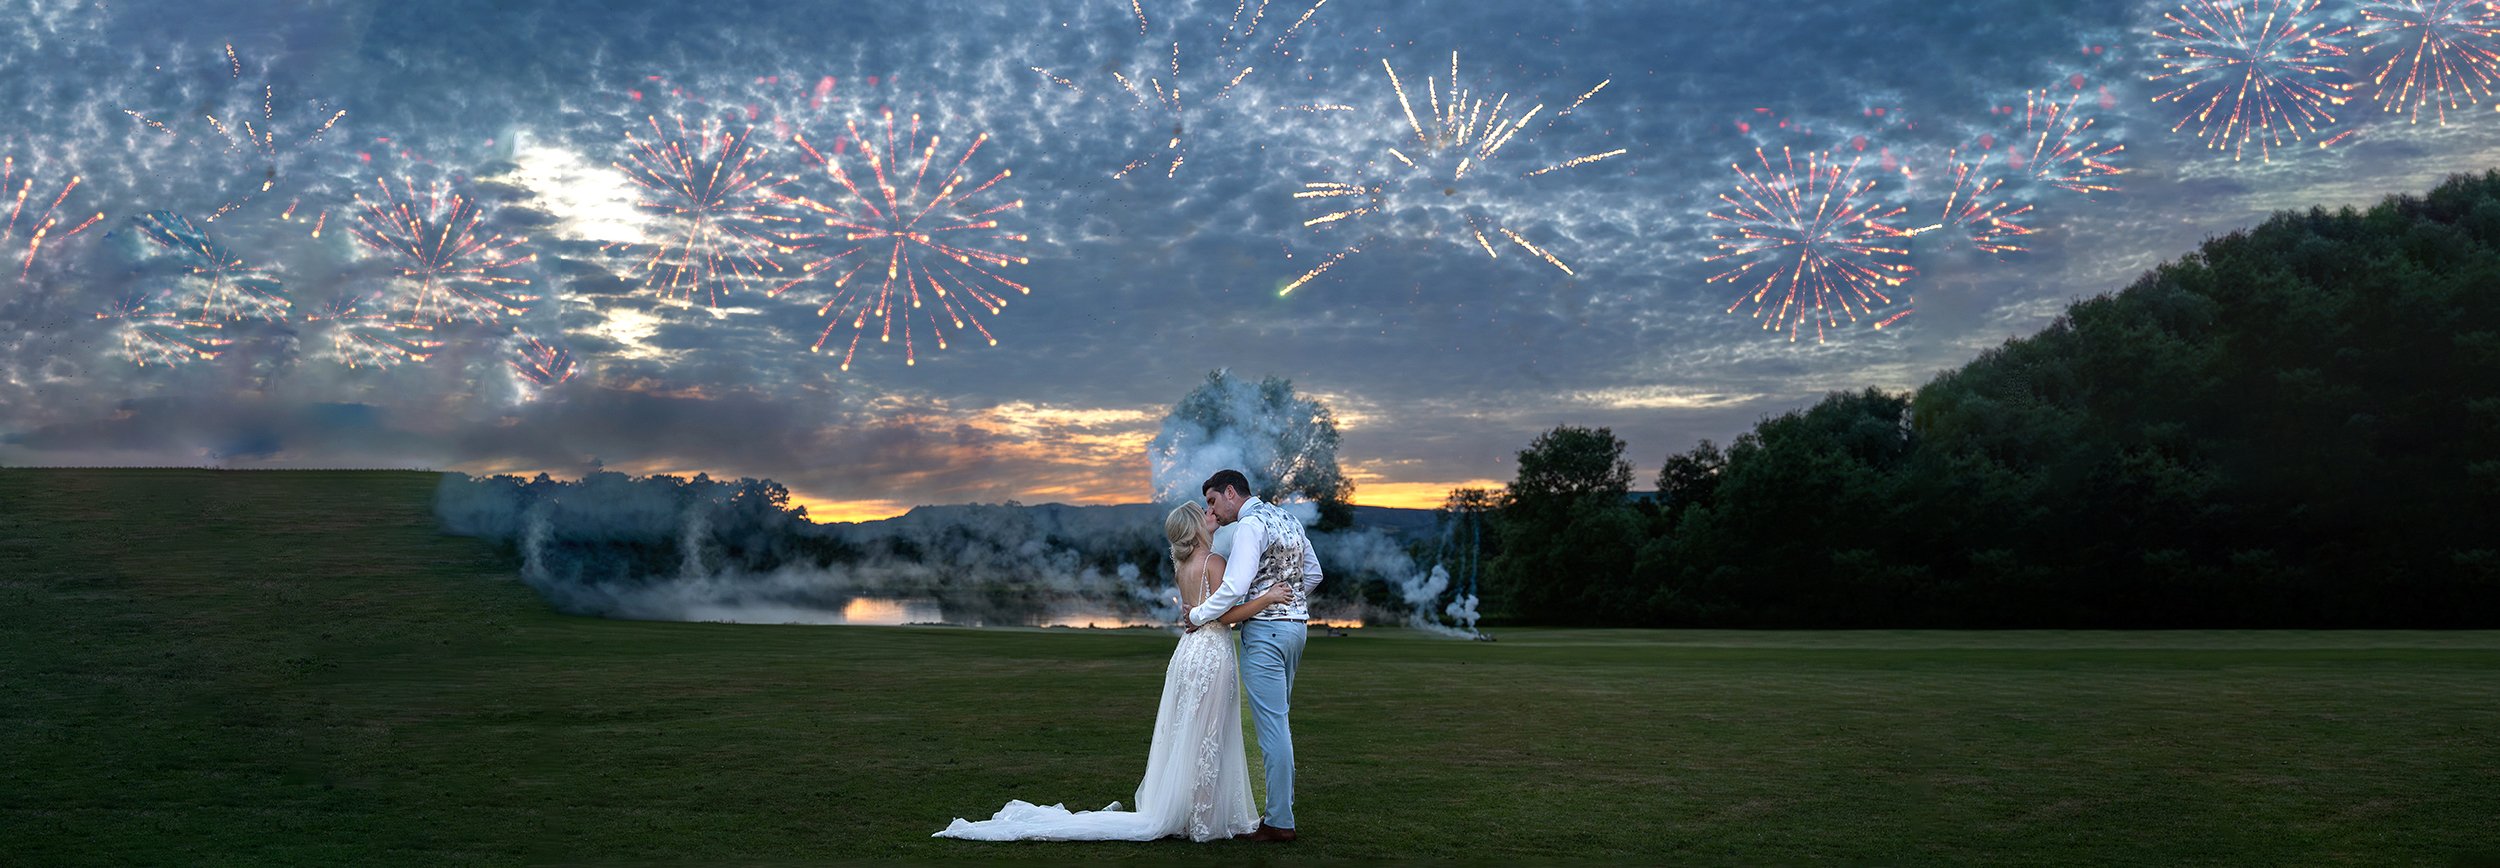 WEDDING FIREWORKS NEWBURGH PRIORY.jpg